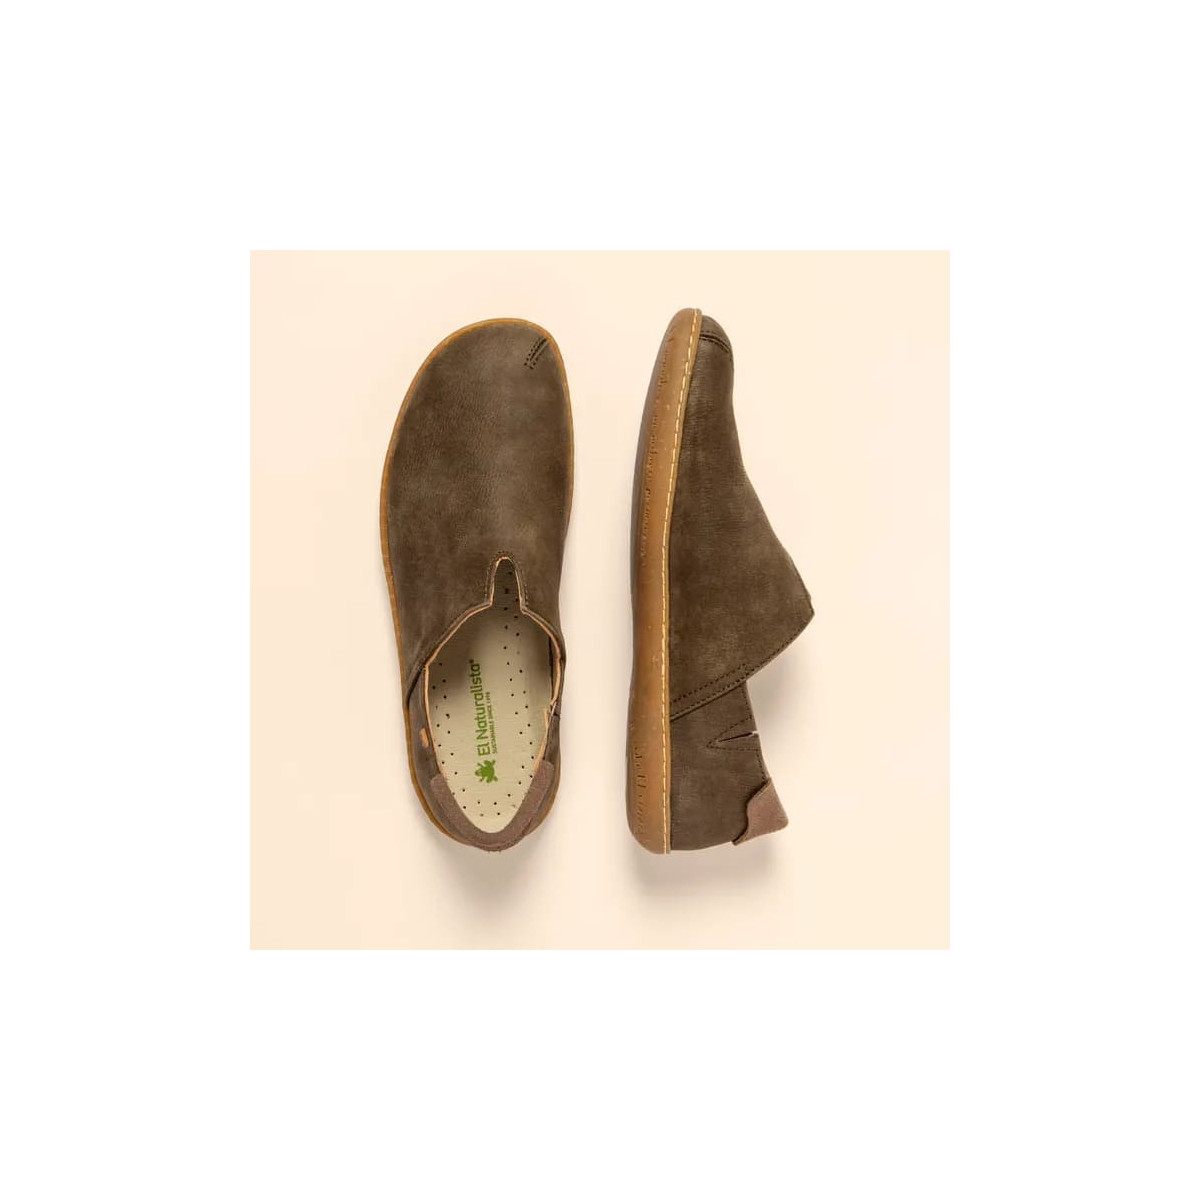 Chaussures confort en cuir naturel et semelles recyclées - Vert - El naturalista